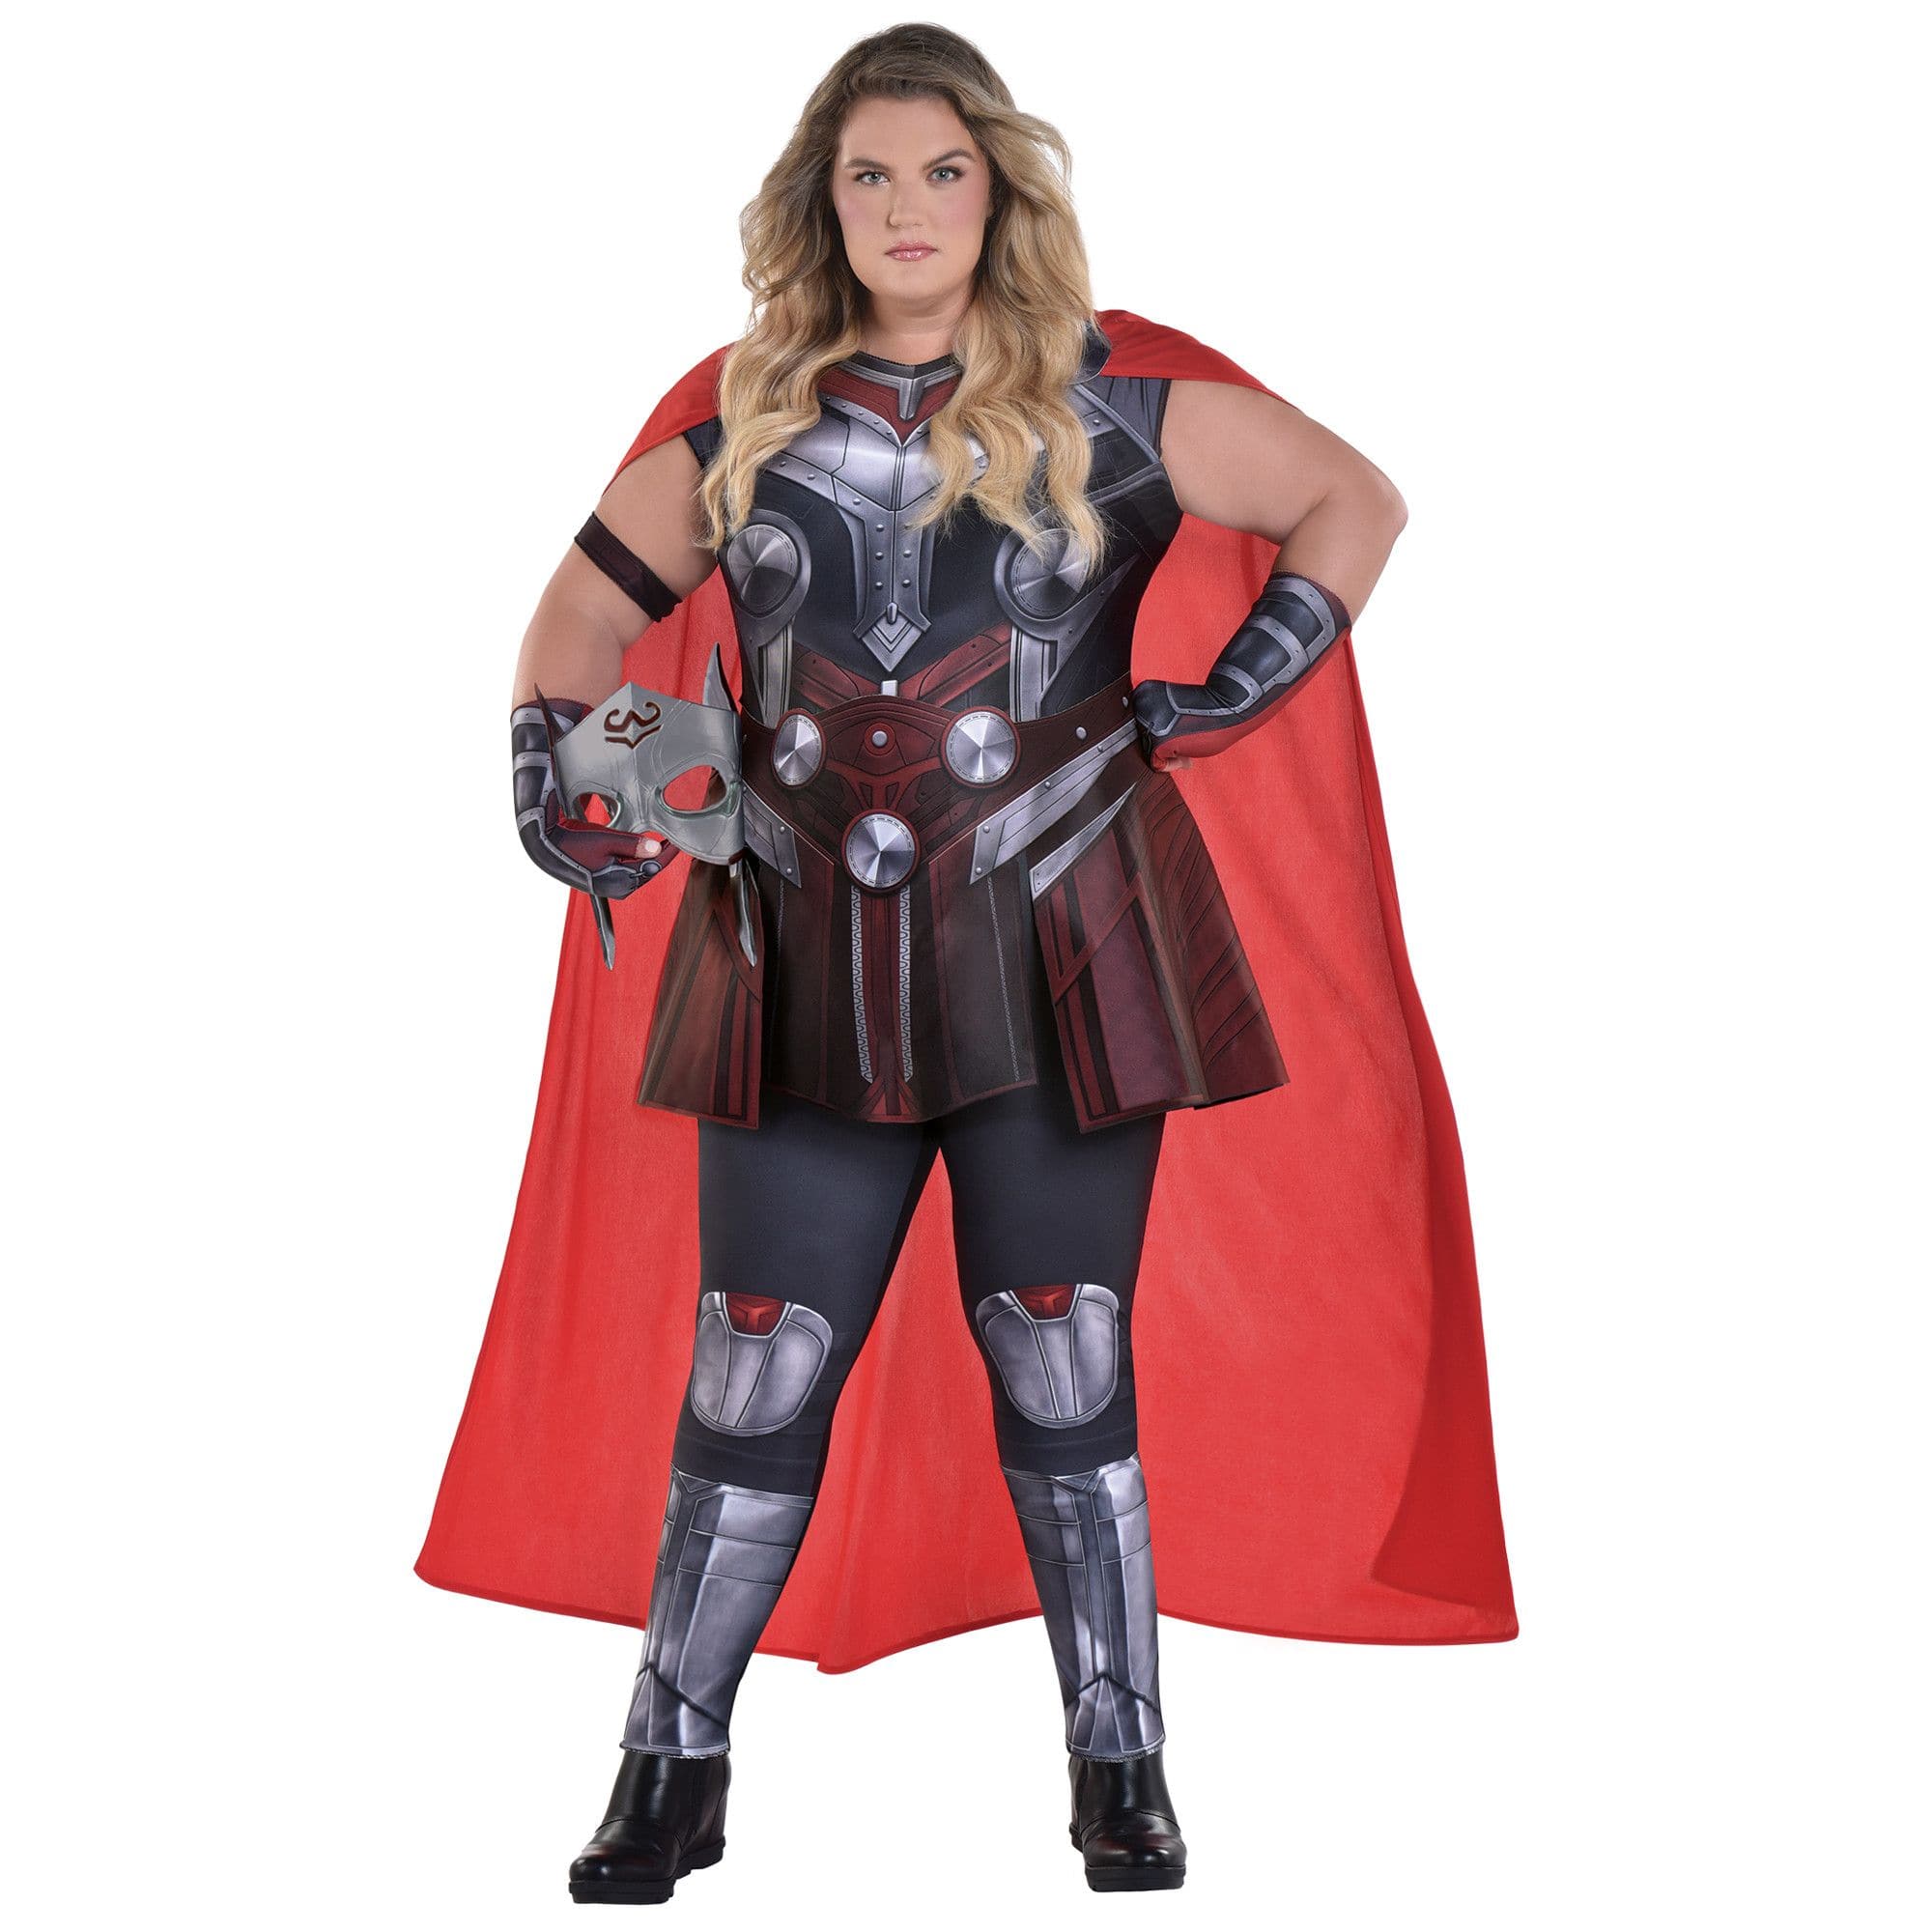 Costume Disney Marvel Thor, femmes, combinaison rouge/argent avec